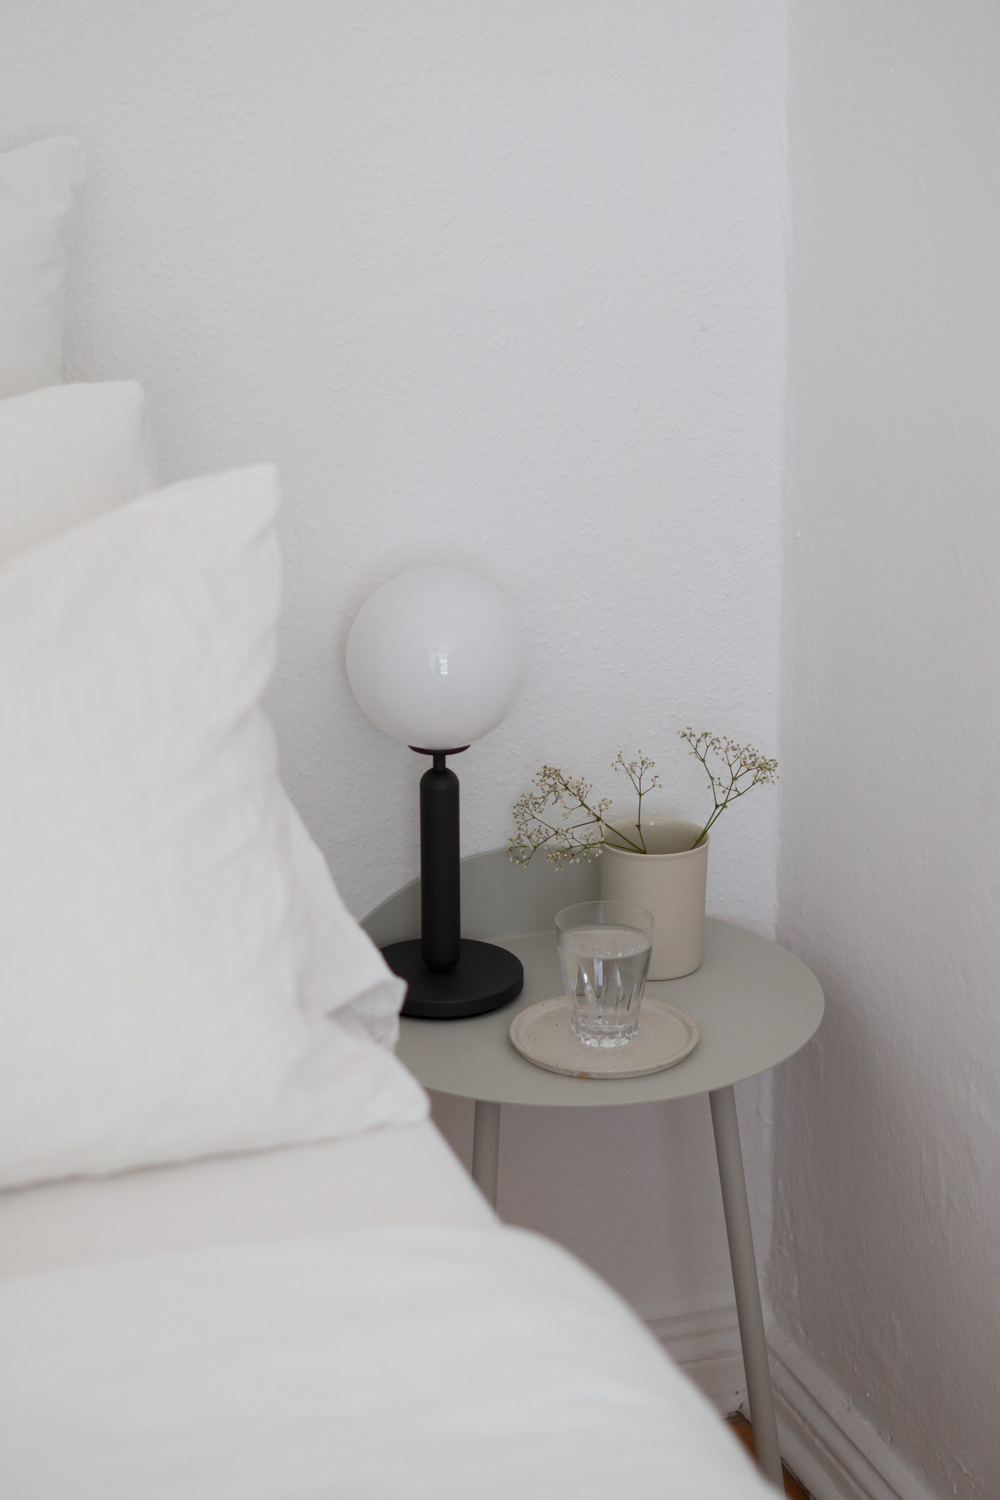 Nuura Lighting, Danish Design, Glass Table Lamp, Miira, Minimalist Home, Classic Interior, Timeless Style, Beige, Bedroom, Bed Side Table, White Scandinavian Decor, Neutral Aesthetic